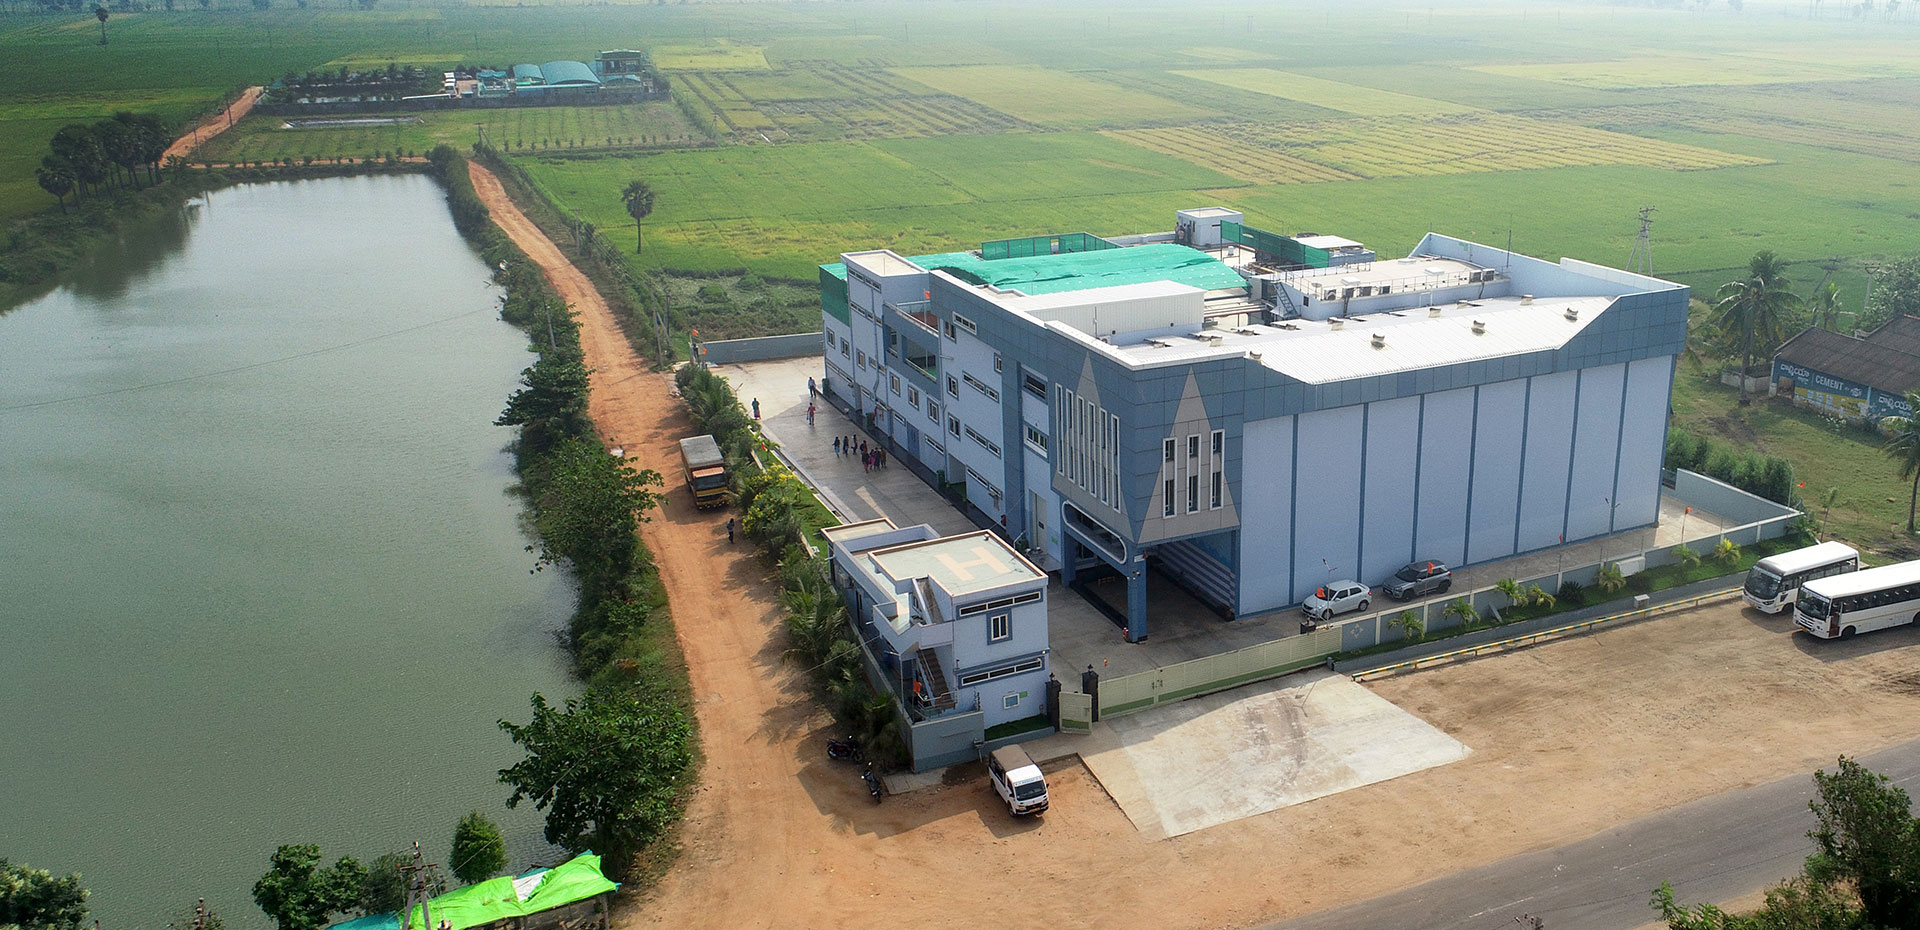 The company's sophisticated plant at Pamarru, Andhra Pradesh, India.